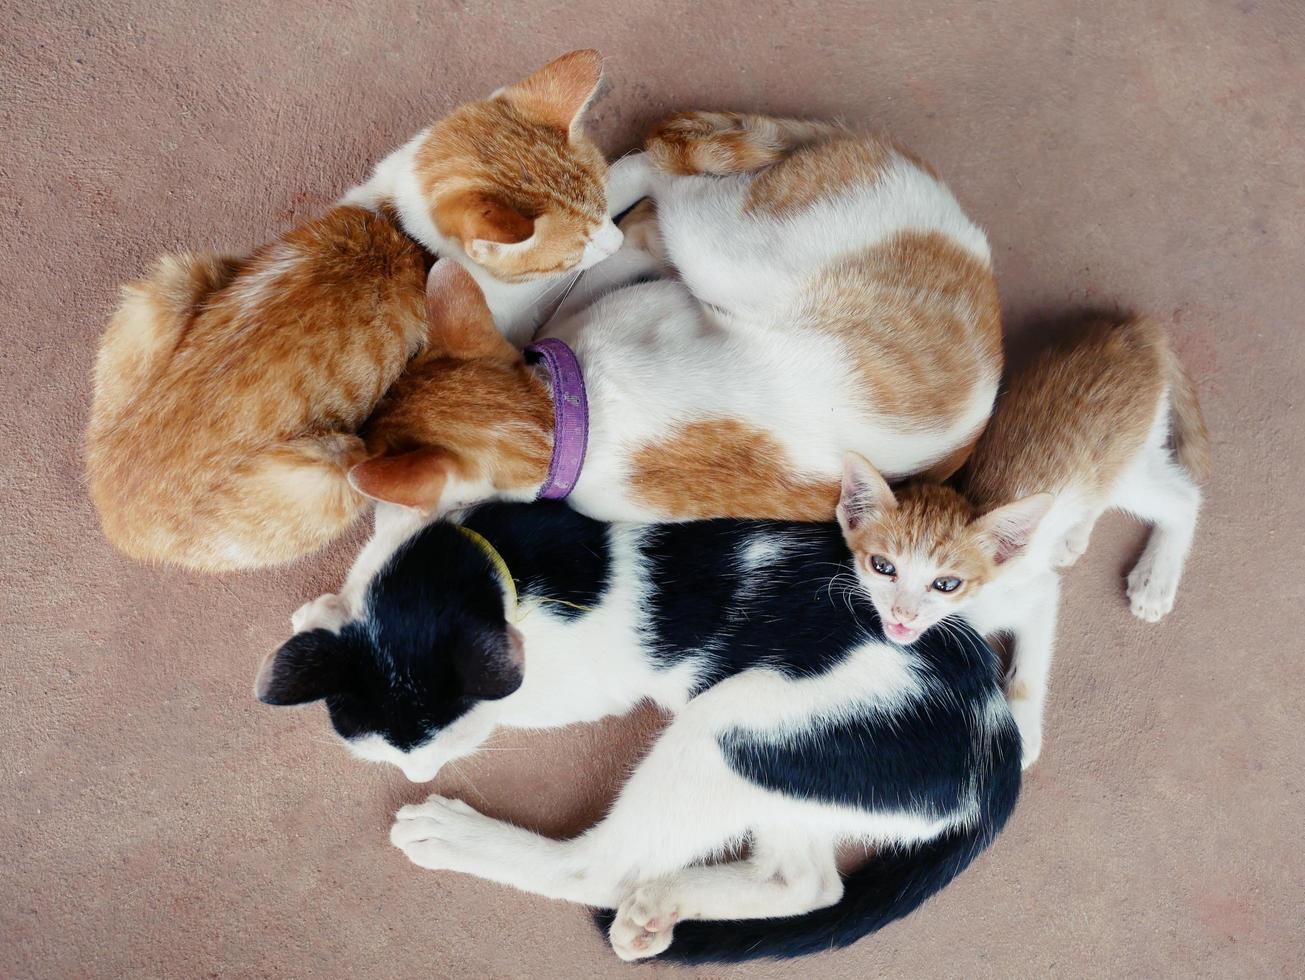 cute cats hug Shows warmth, intimacy, trust, cheerfulness. photo